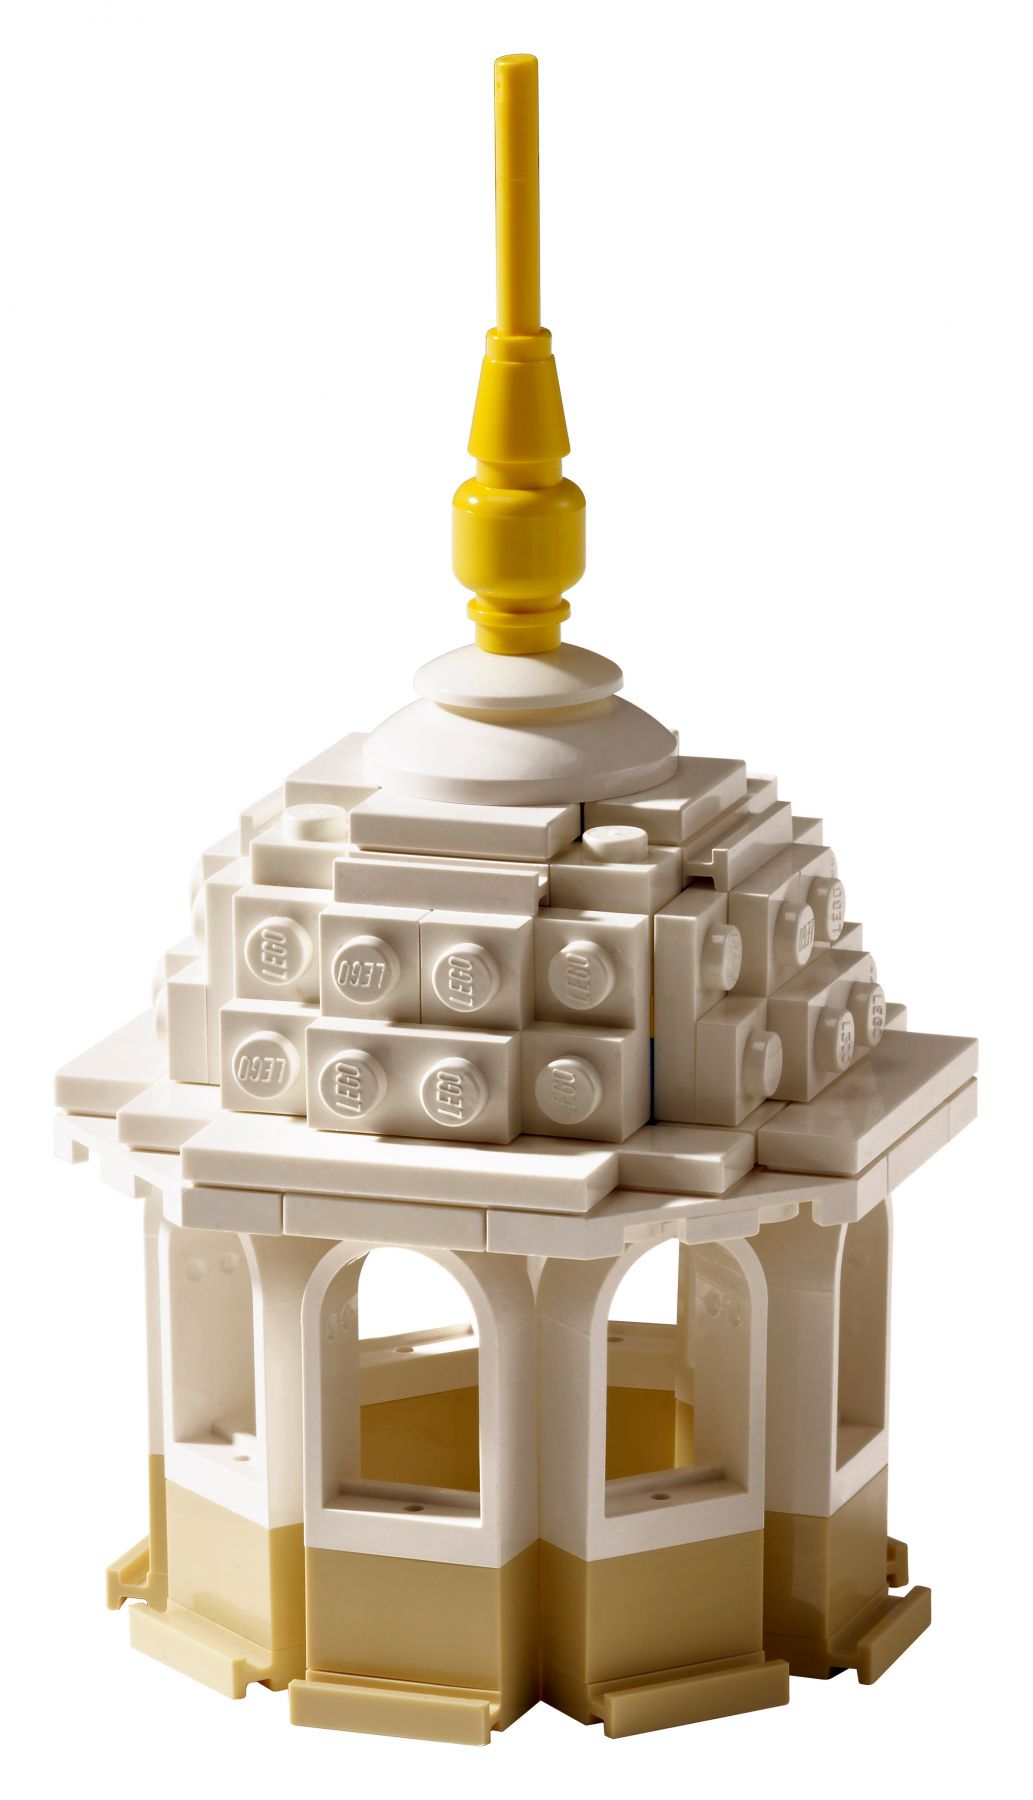 LEGO Advanced Models 10256 Taj Mahal LEGO_10256_alt7.jpg